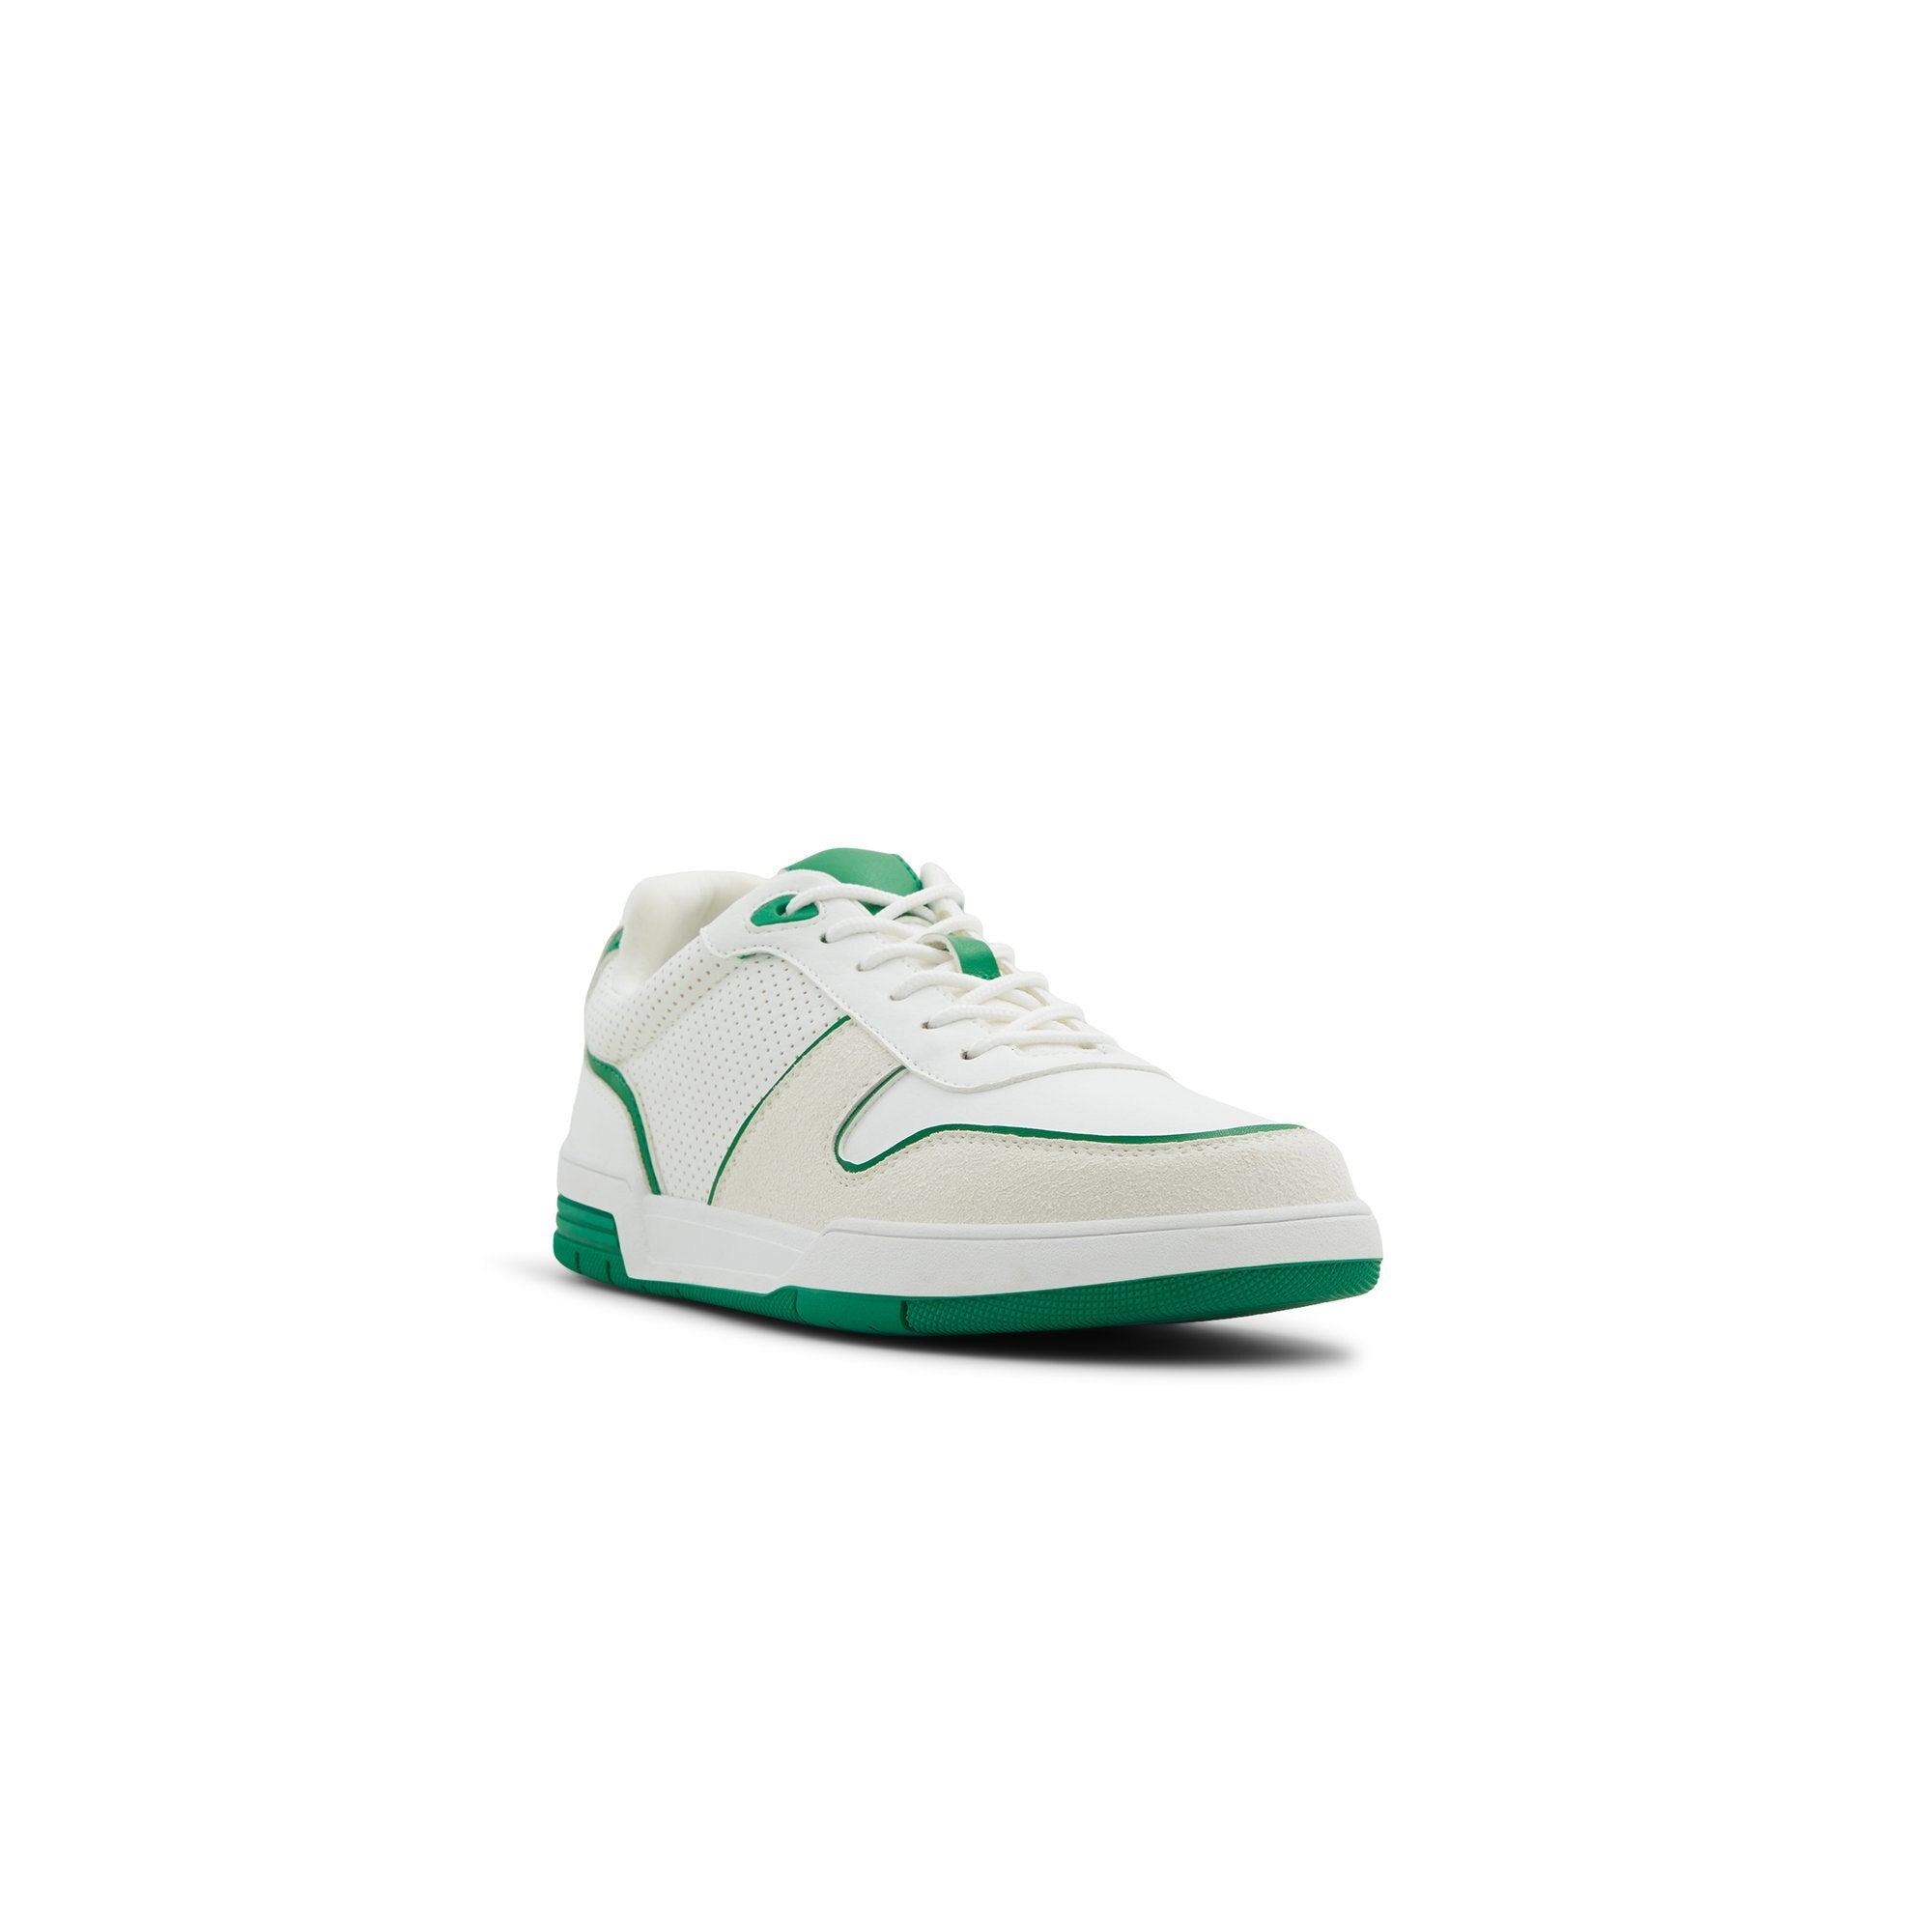 Wylderr / Sneakers Women Shoes - Bright Green - CALL IT SPRING KSA